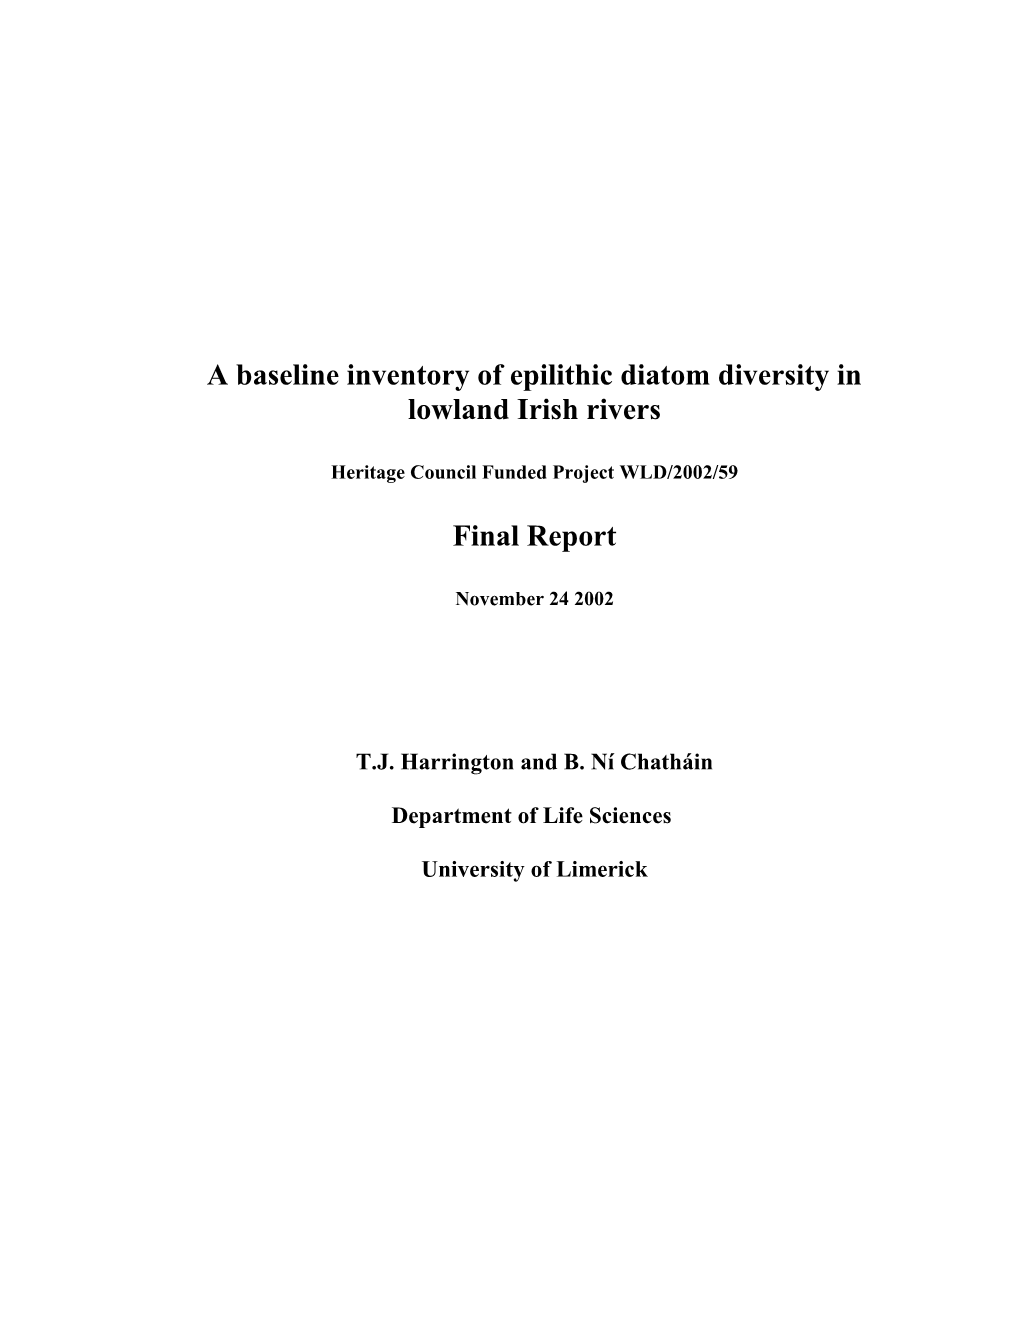 A Baseline Inventory of Diatom Diversity in Lowland Irish Rivers